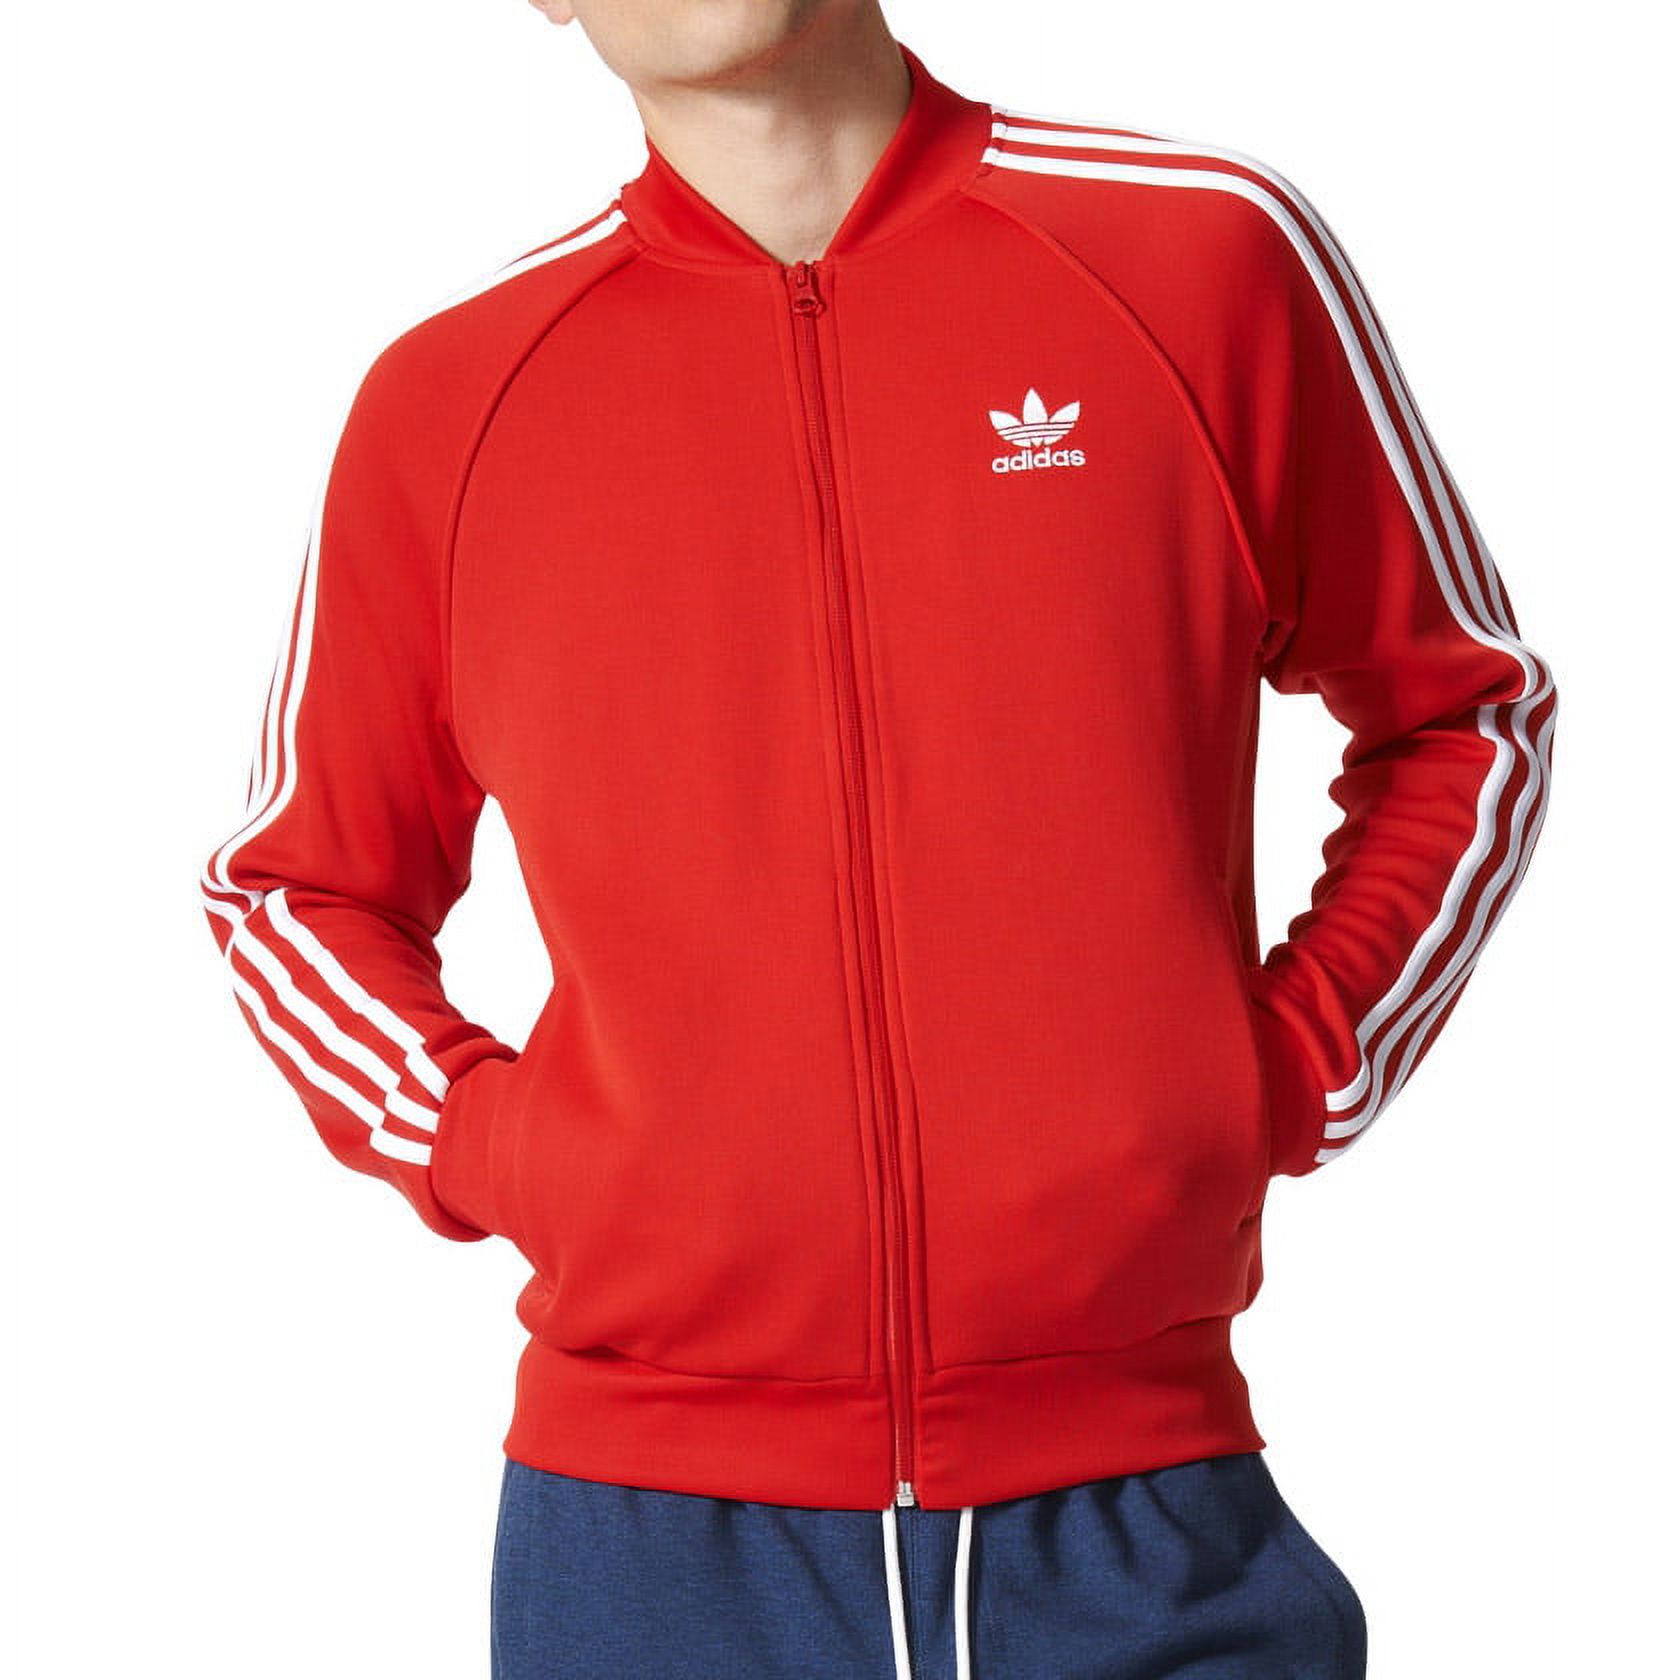 Adidas Originals Superstar Men's Track Jacket Vivid Red/White ay7062 - image 1 of 5